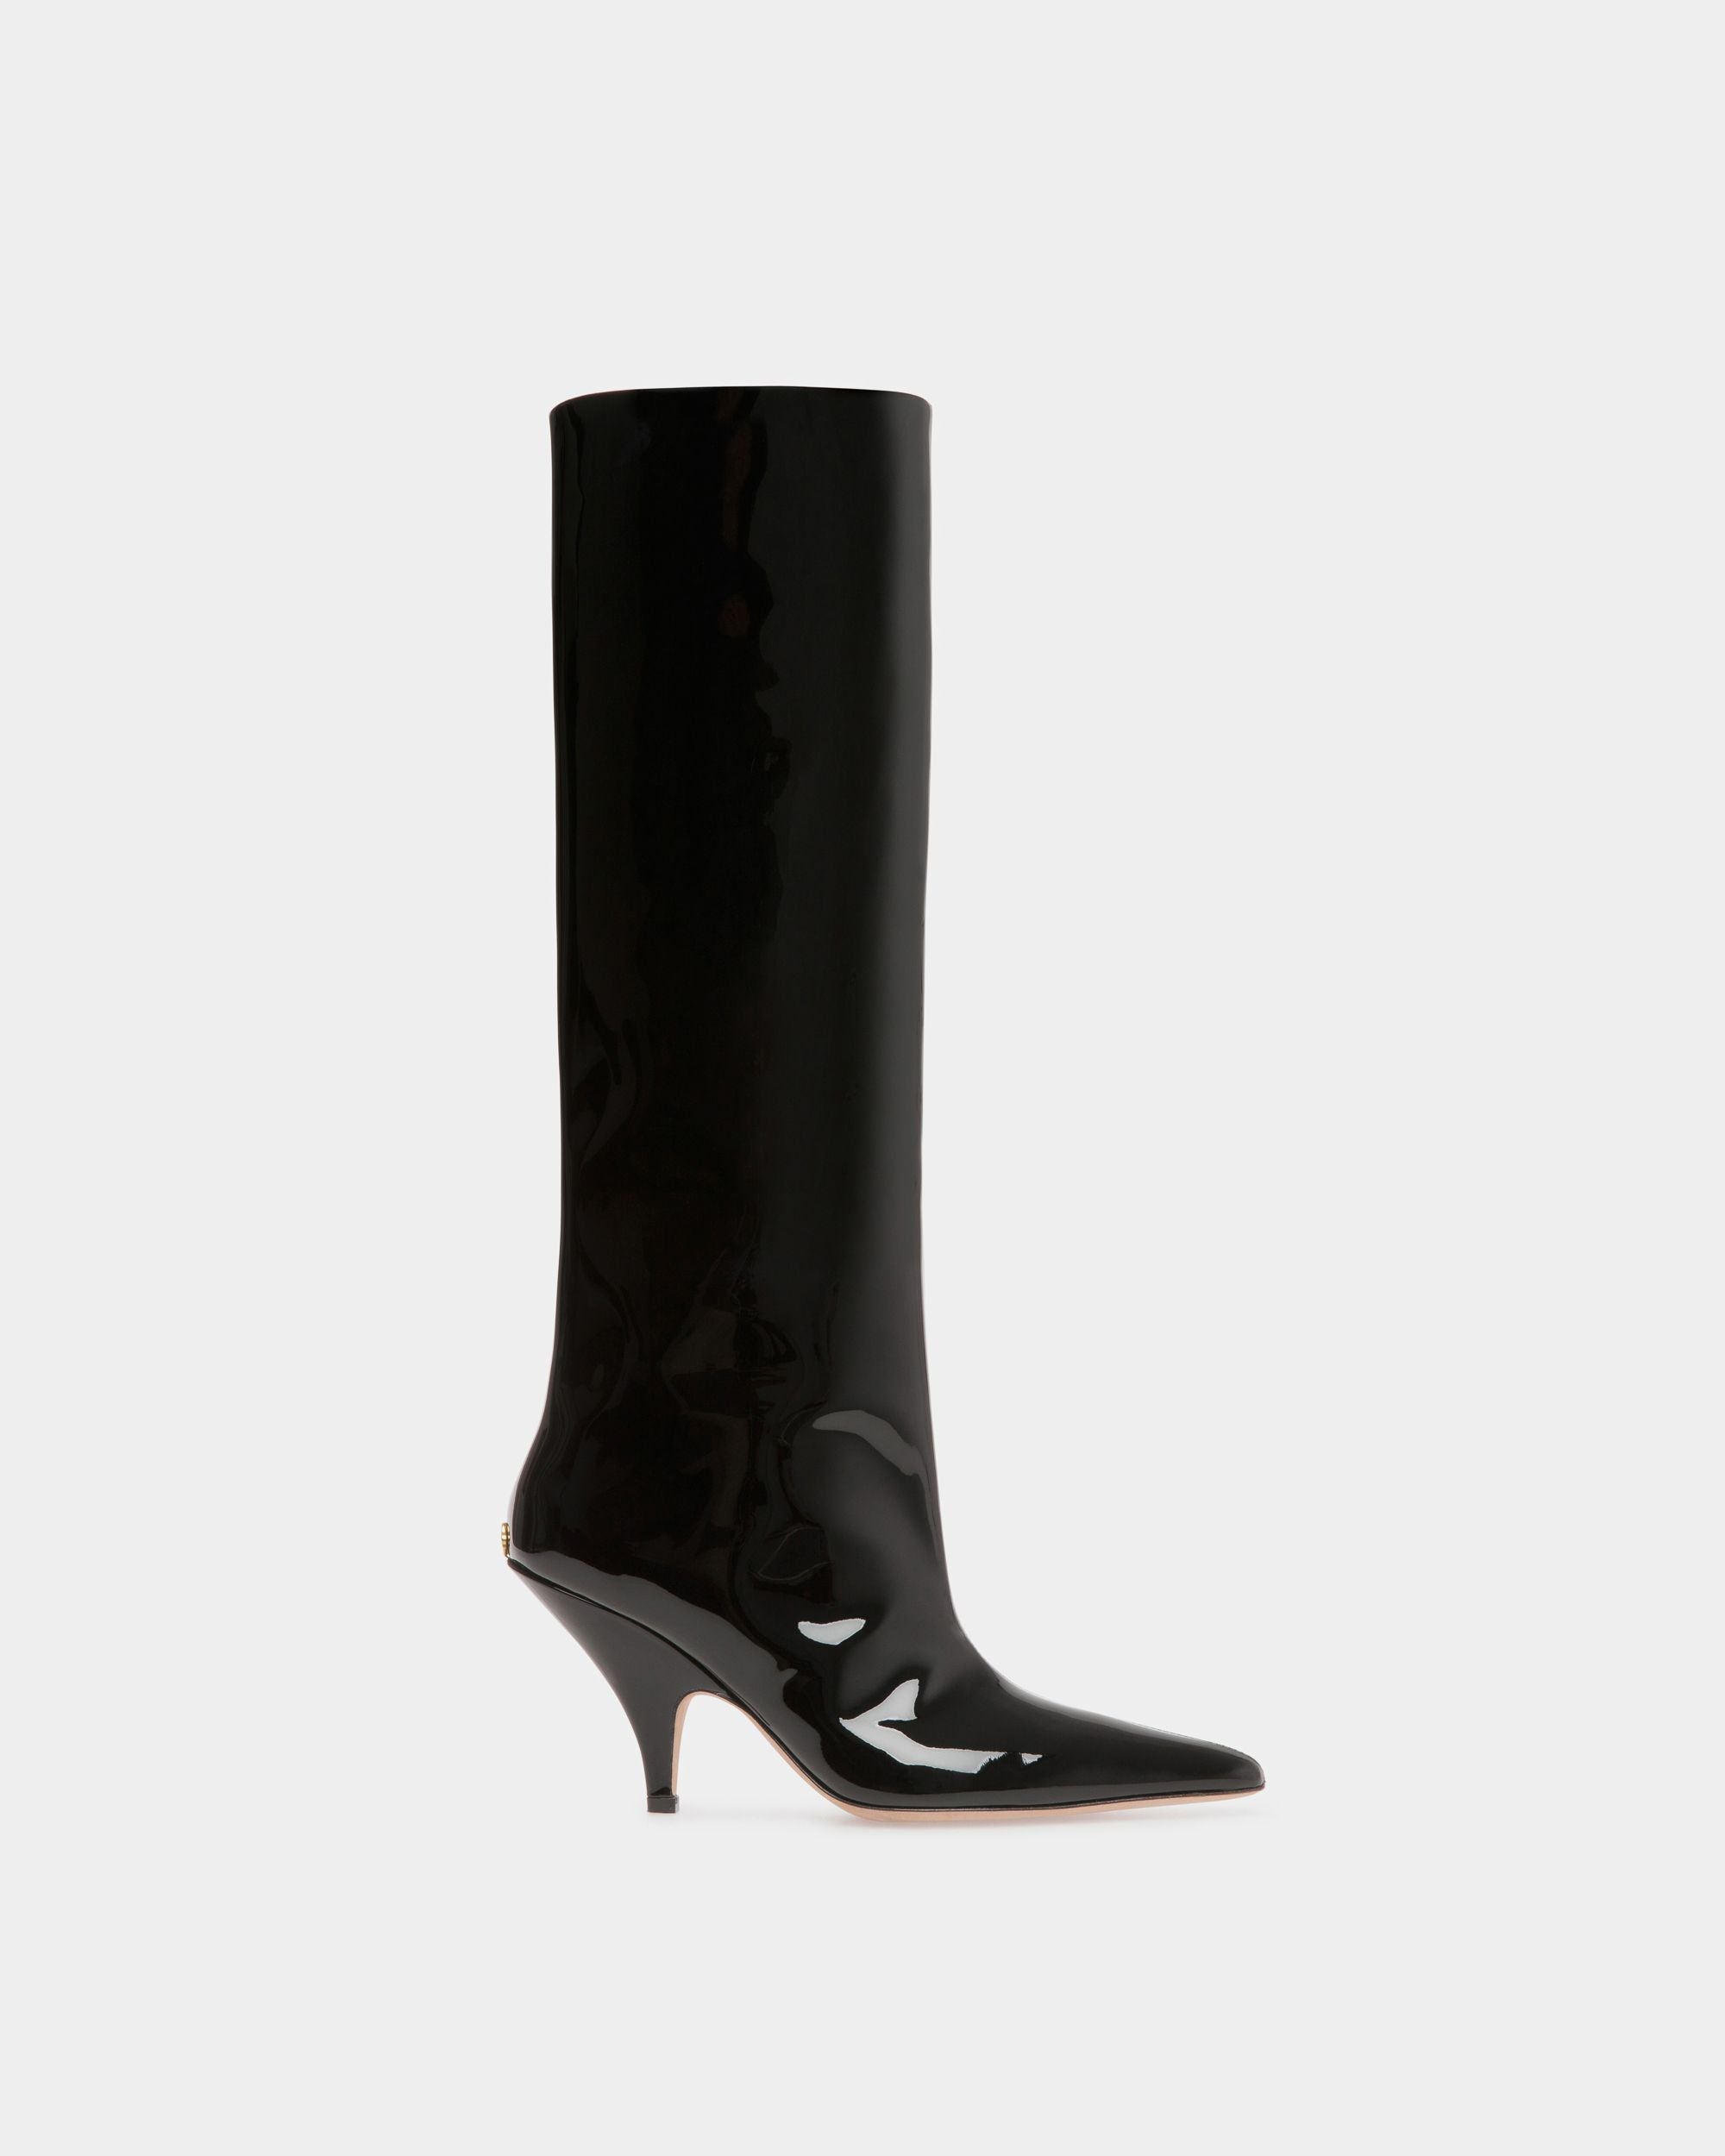 Kika | Women's Boots | Black Leather | Bally | Still Life Side